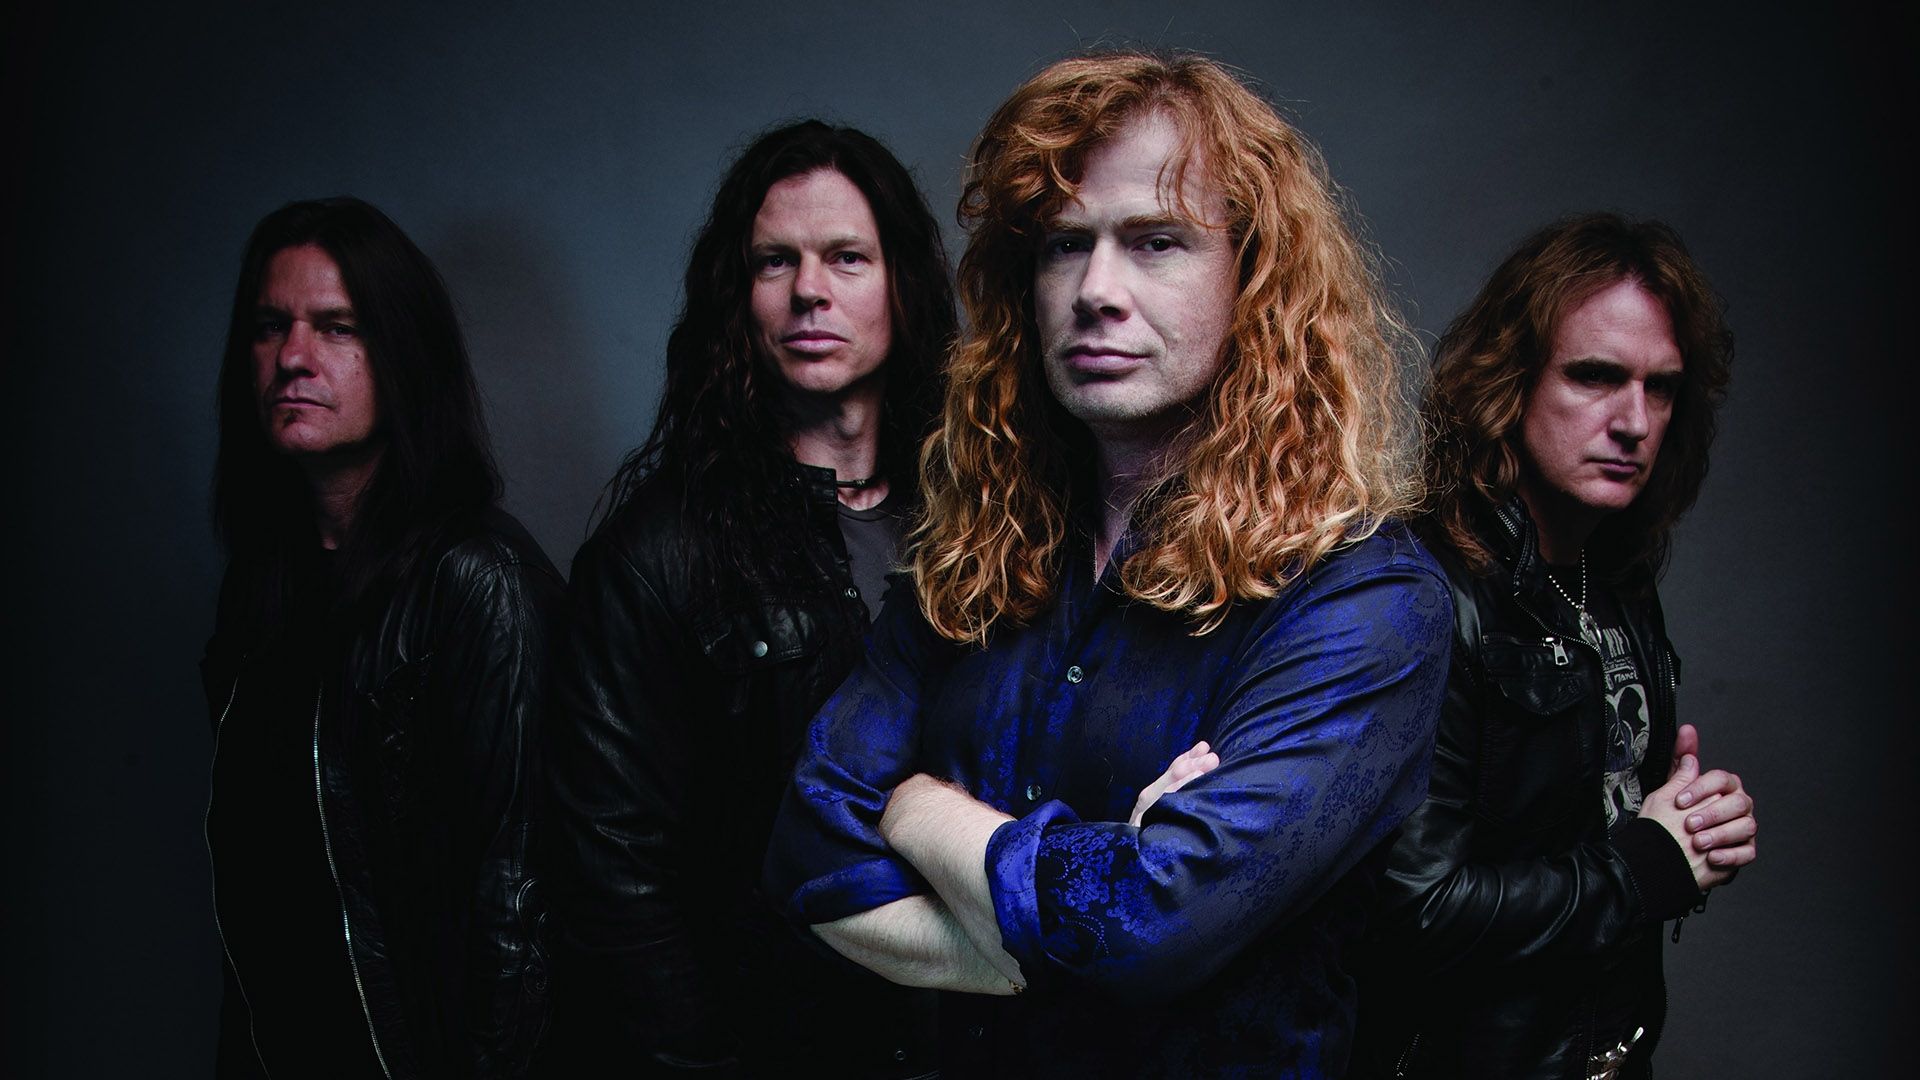 Download Wallpaper 1920x1080 Megadeth, Band, Hair, Clothes